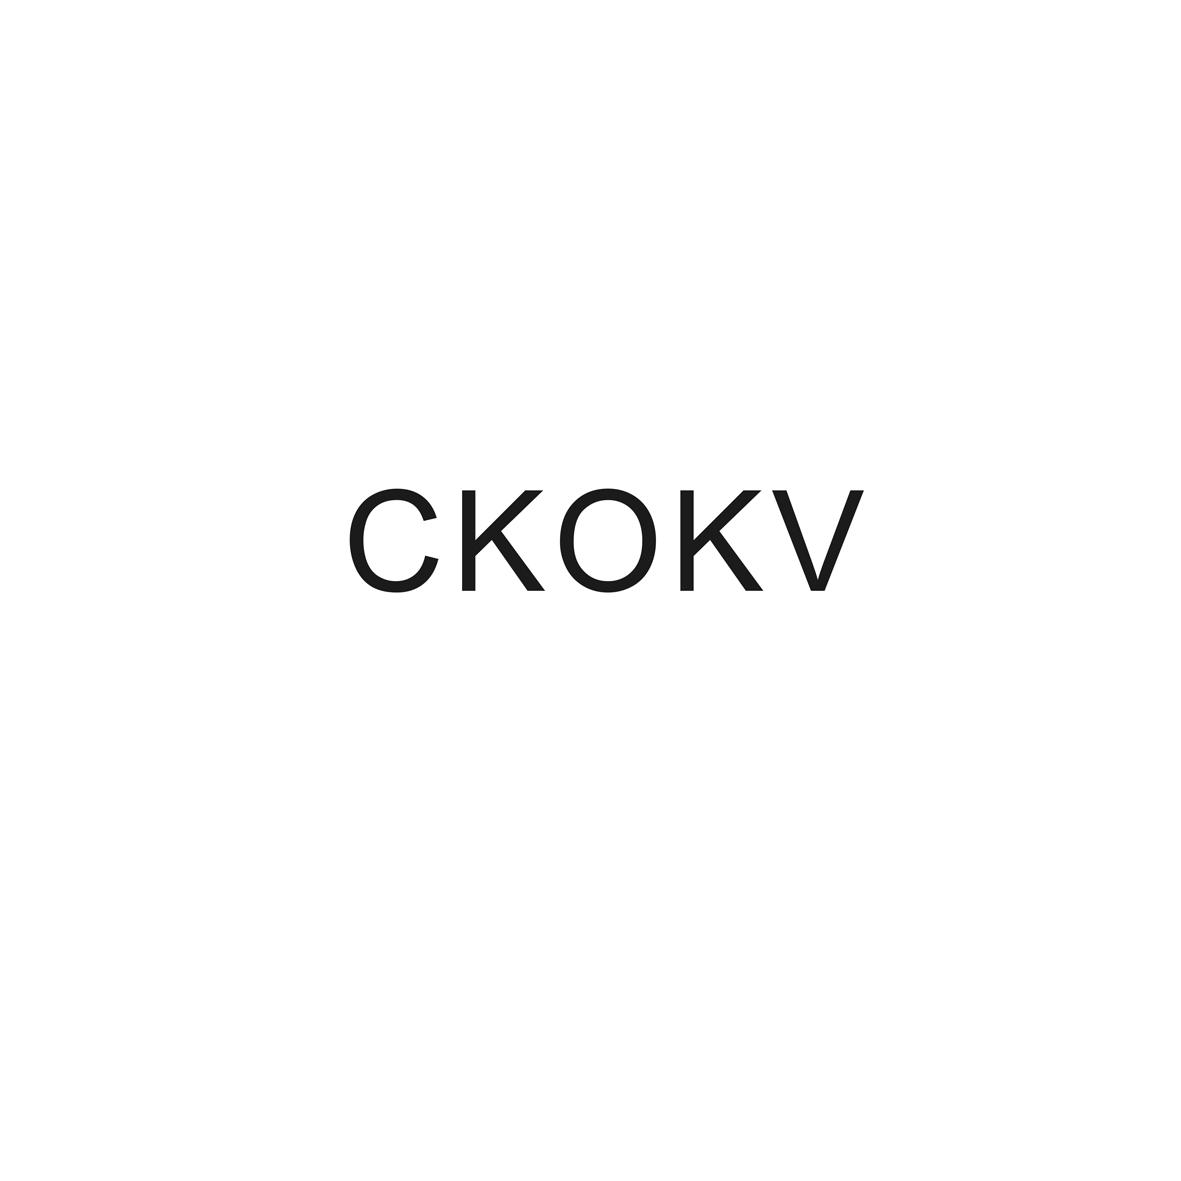 CKOKV